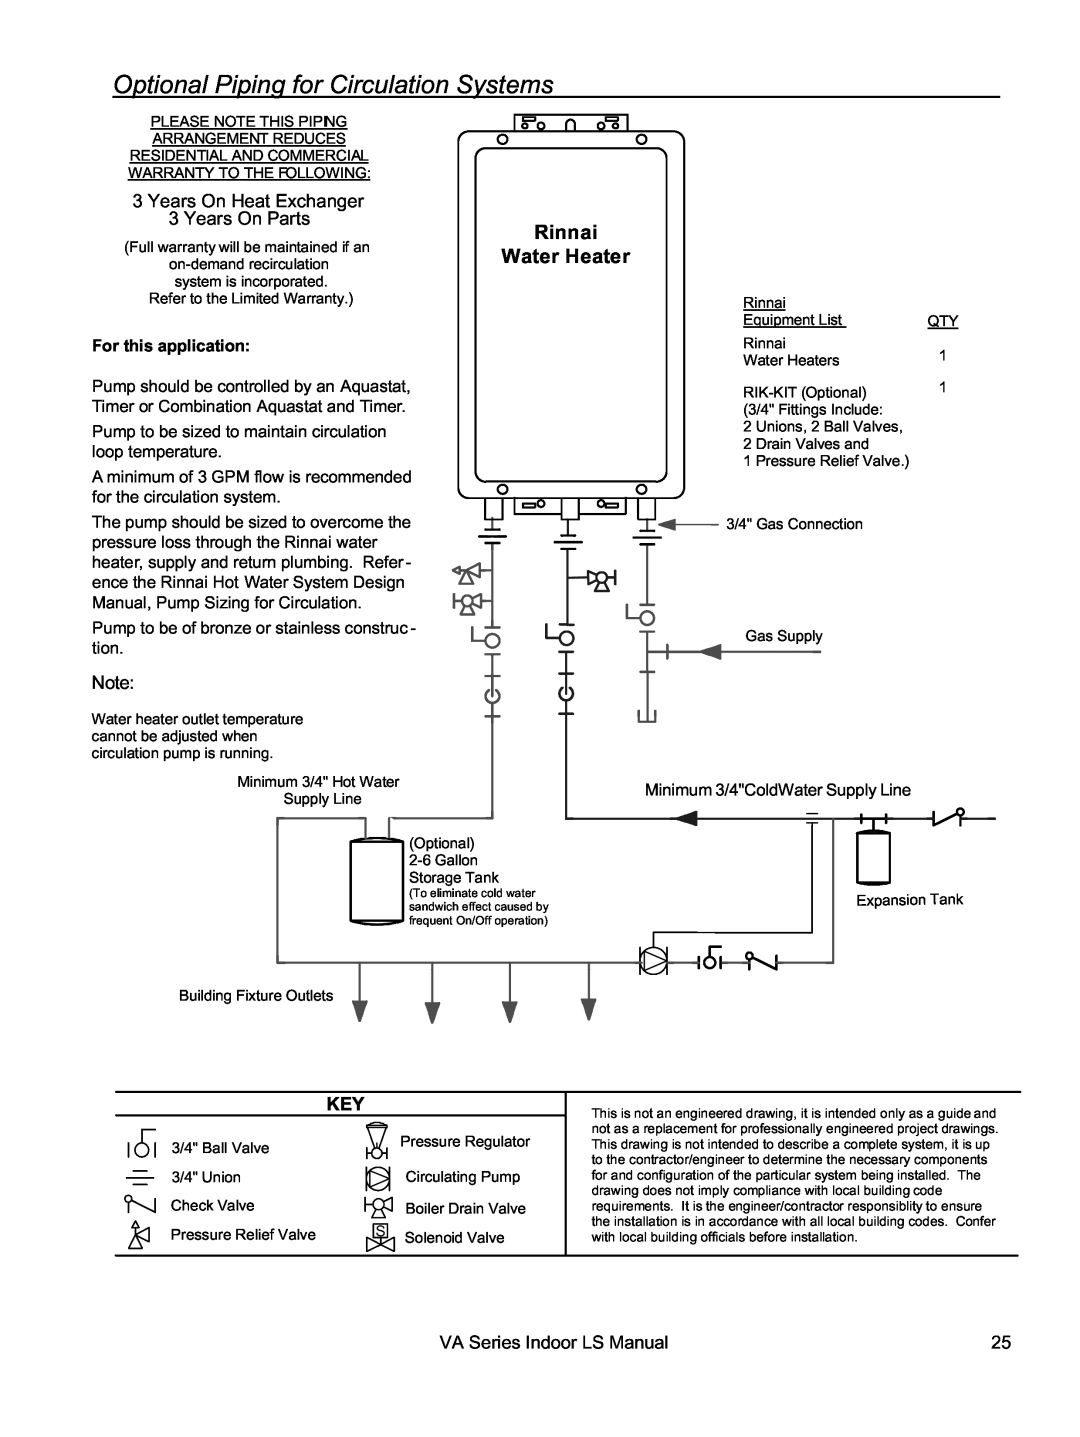 Rinnai REU-VA3237FFU installation manual Optional Piping for Circulation Systems, Rinnai Water Heater, For this application 